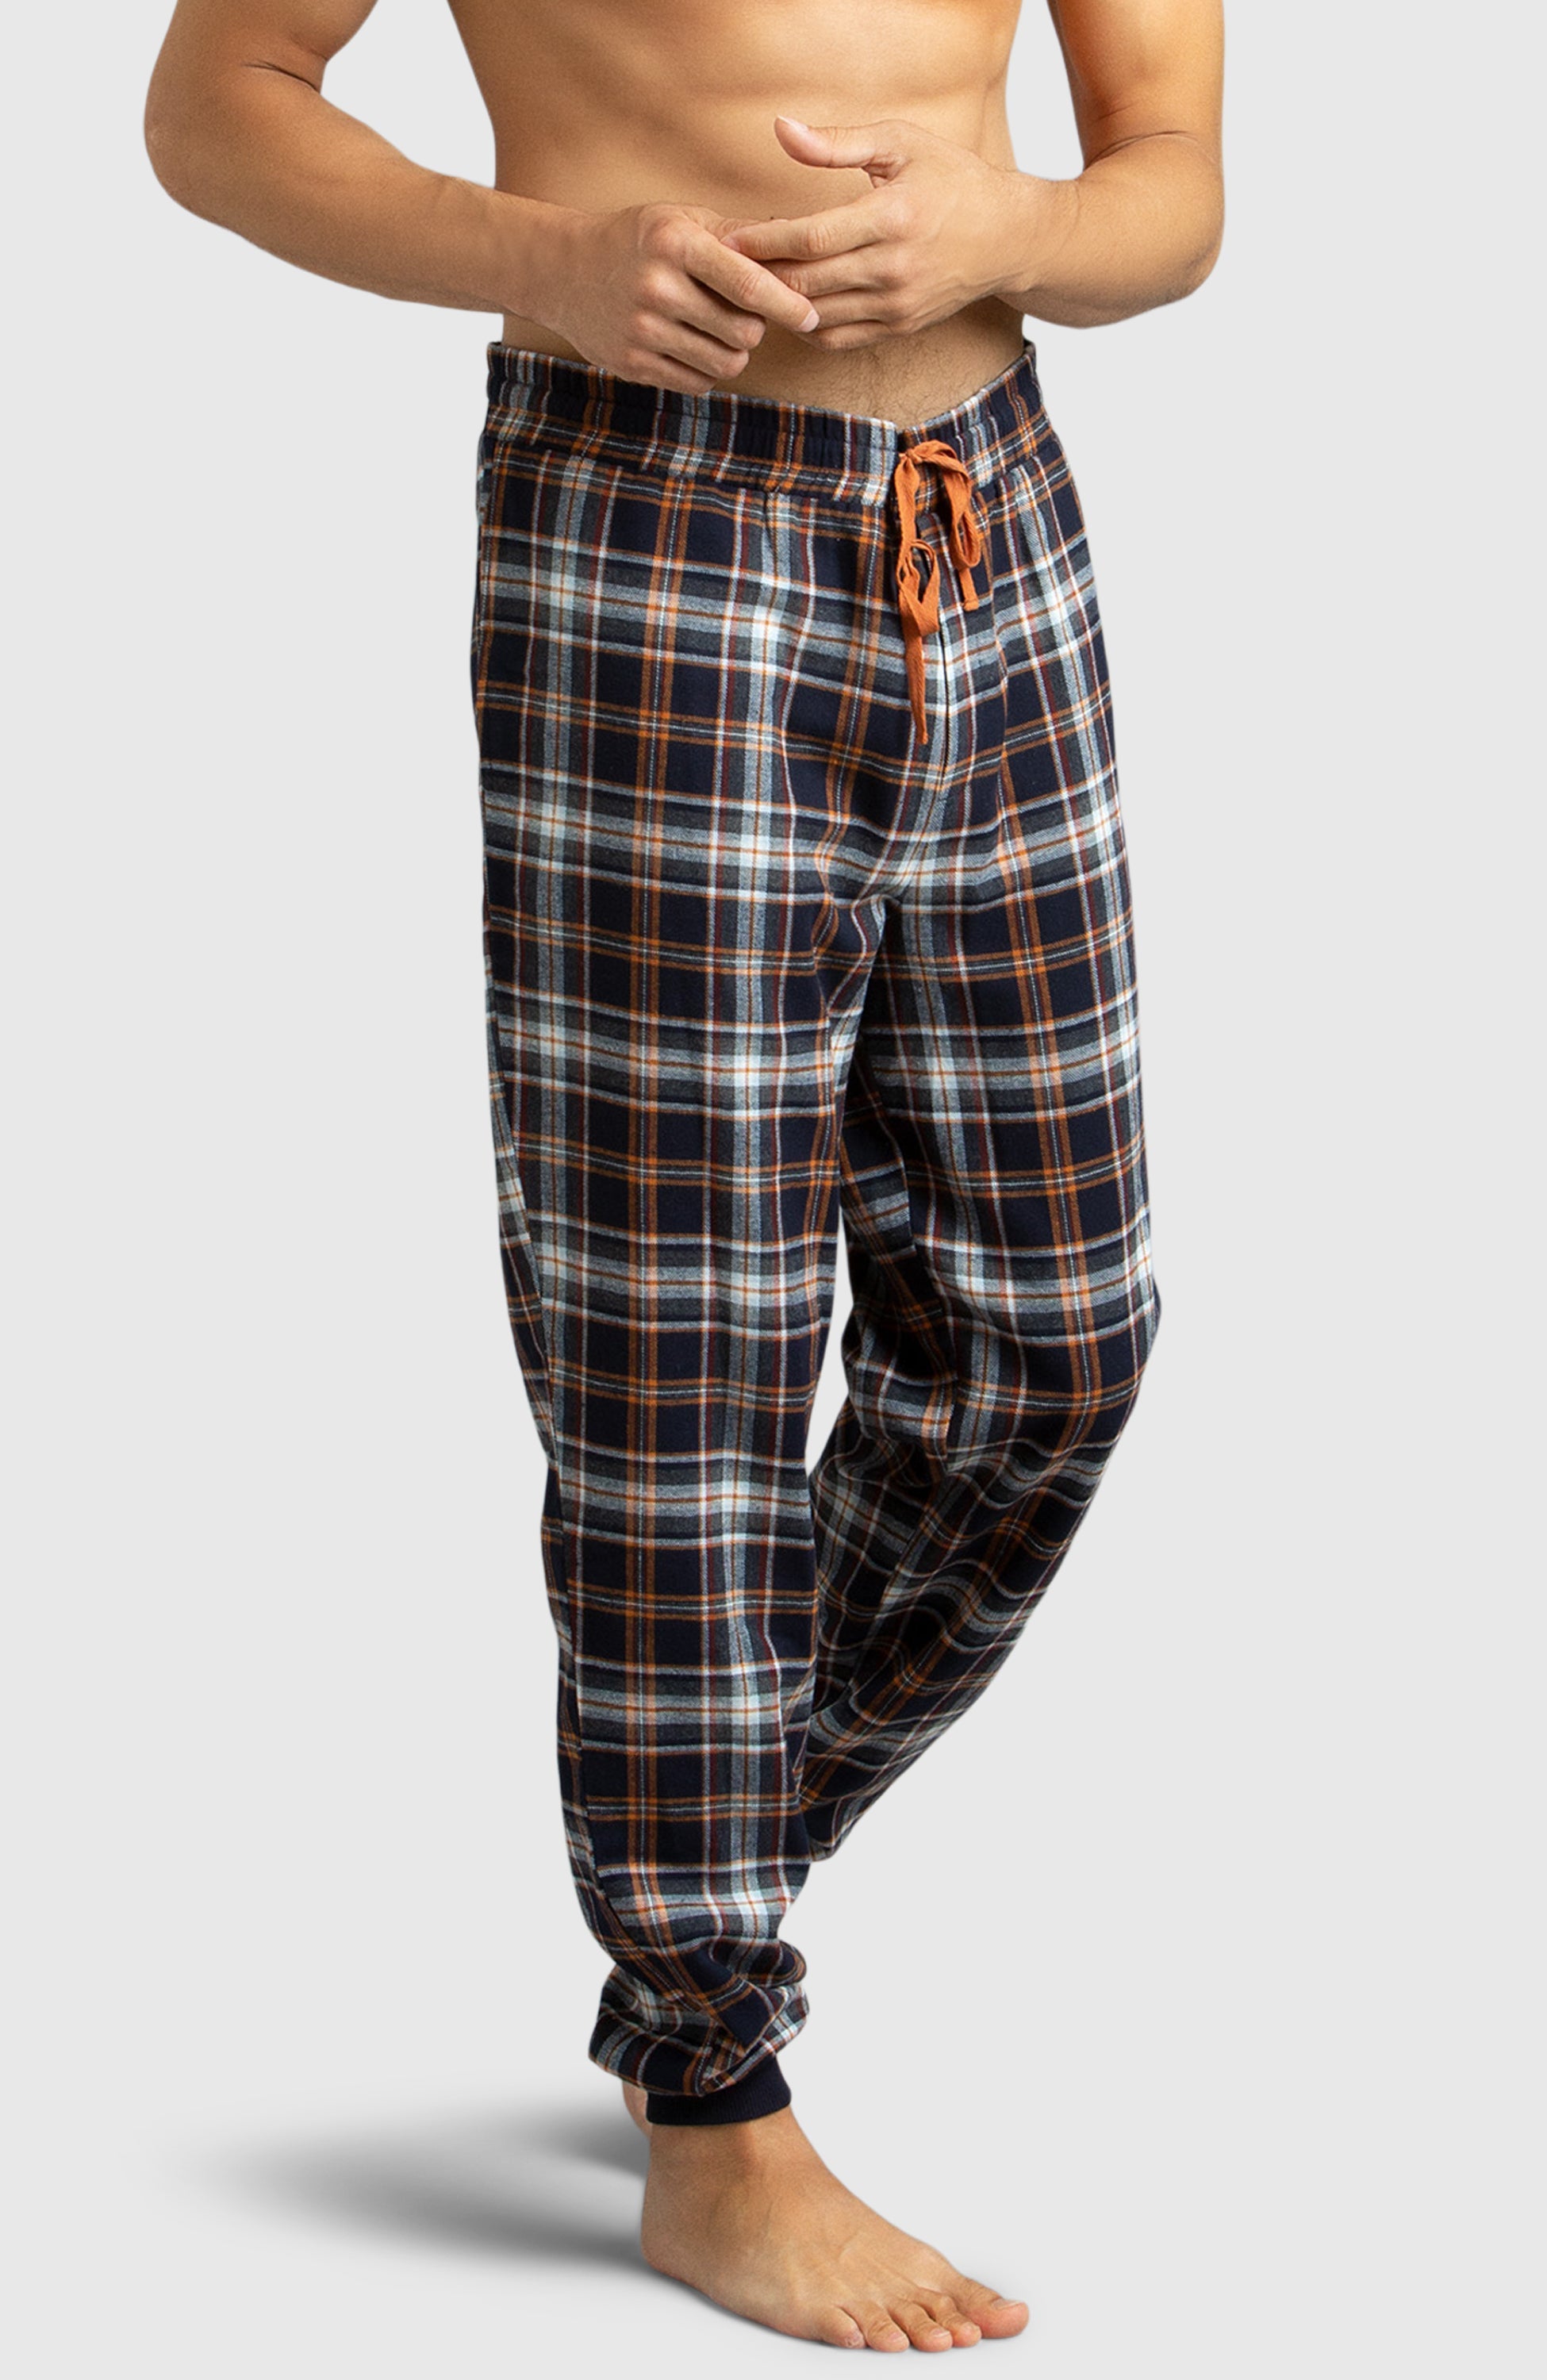 Disney Women's Plush Jogger Pajama Pants - Pack of 2 – Premium Apparel Shop